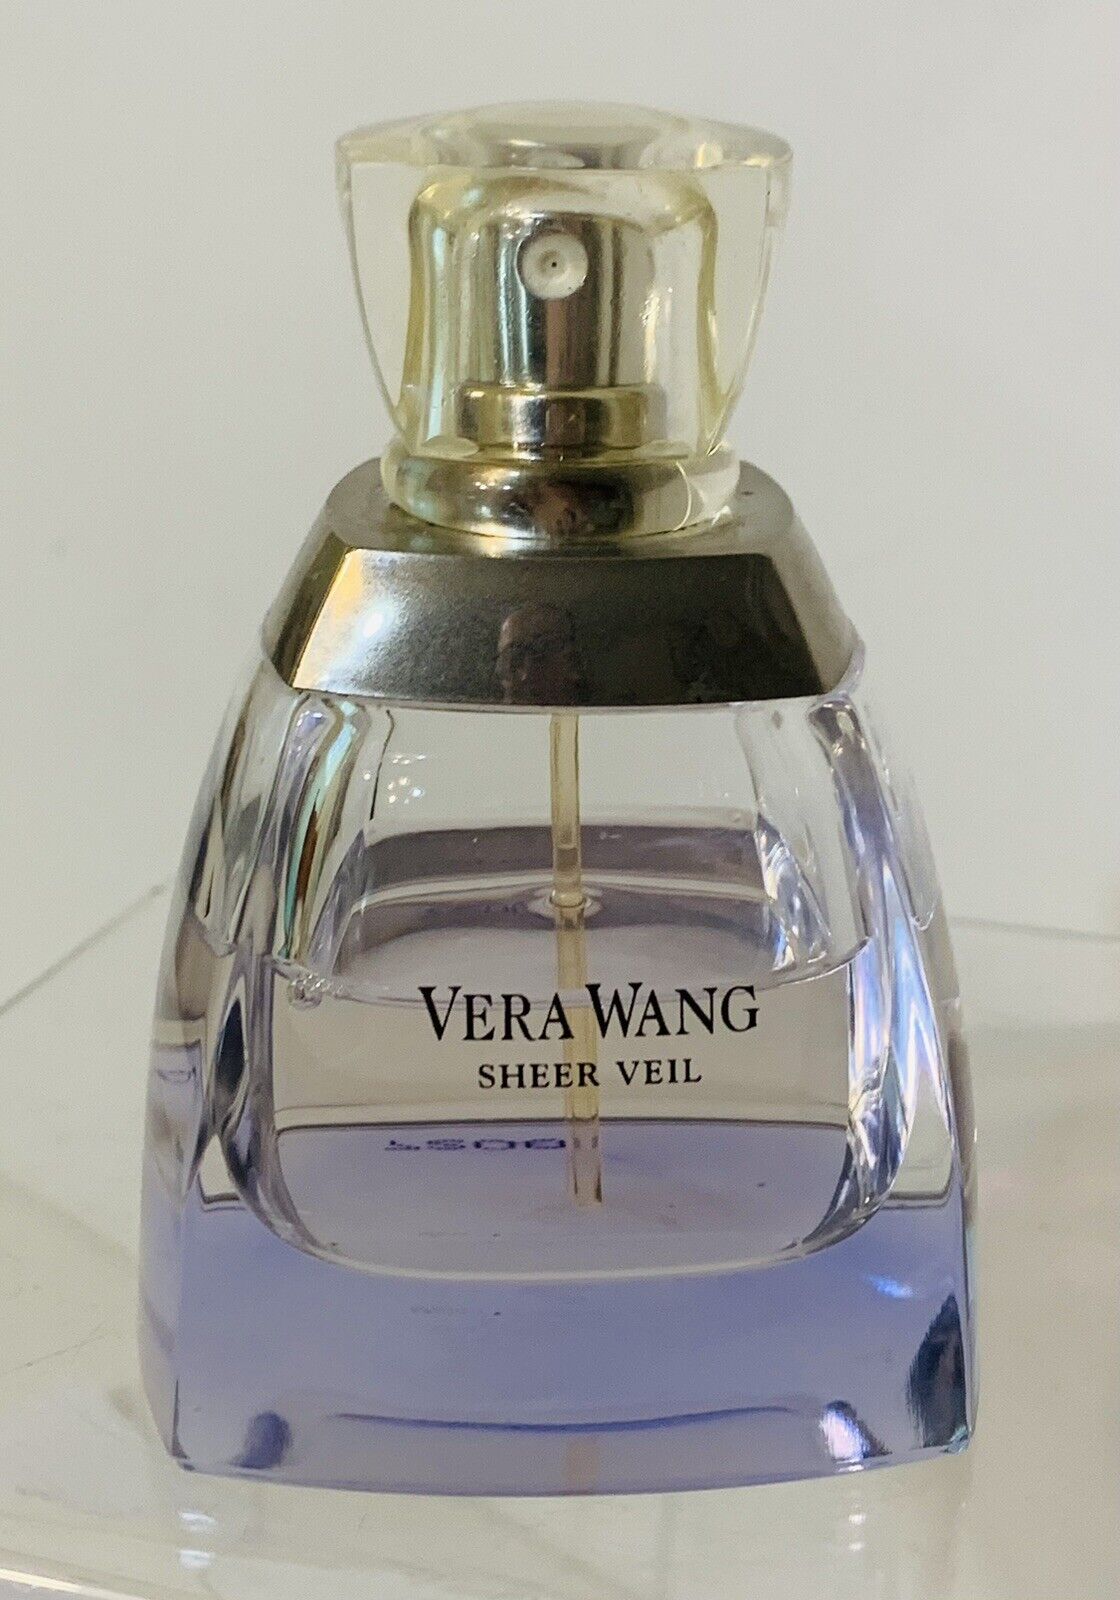 Vera Wang Sheer Veil 1.7oz/50 ml Eau de Parfum Spray Limited Edition EDP - READ